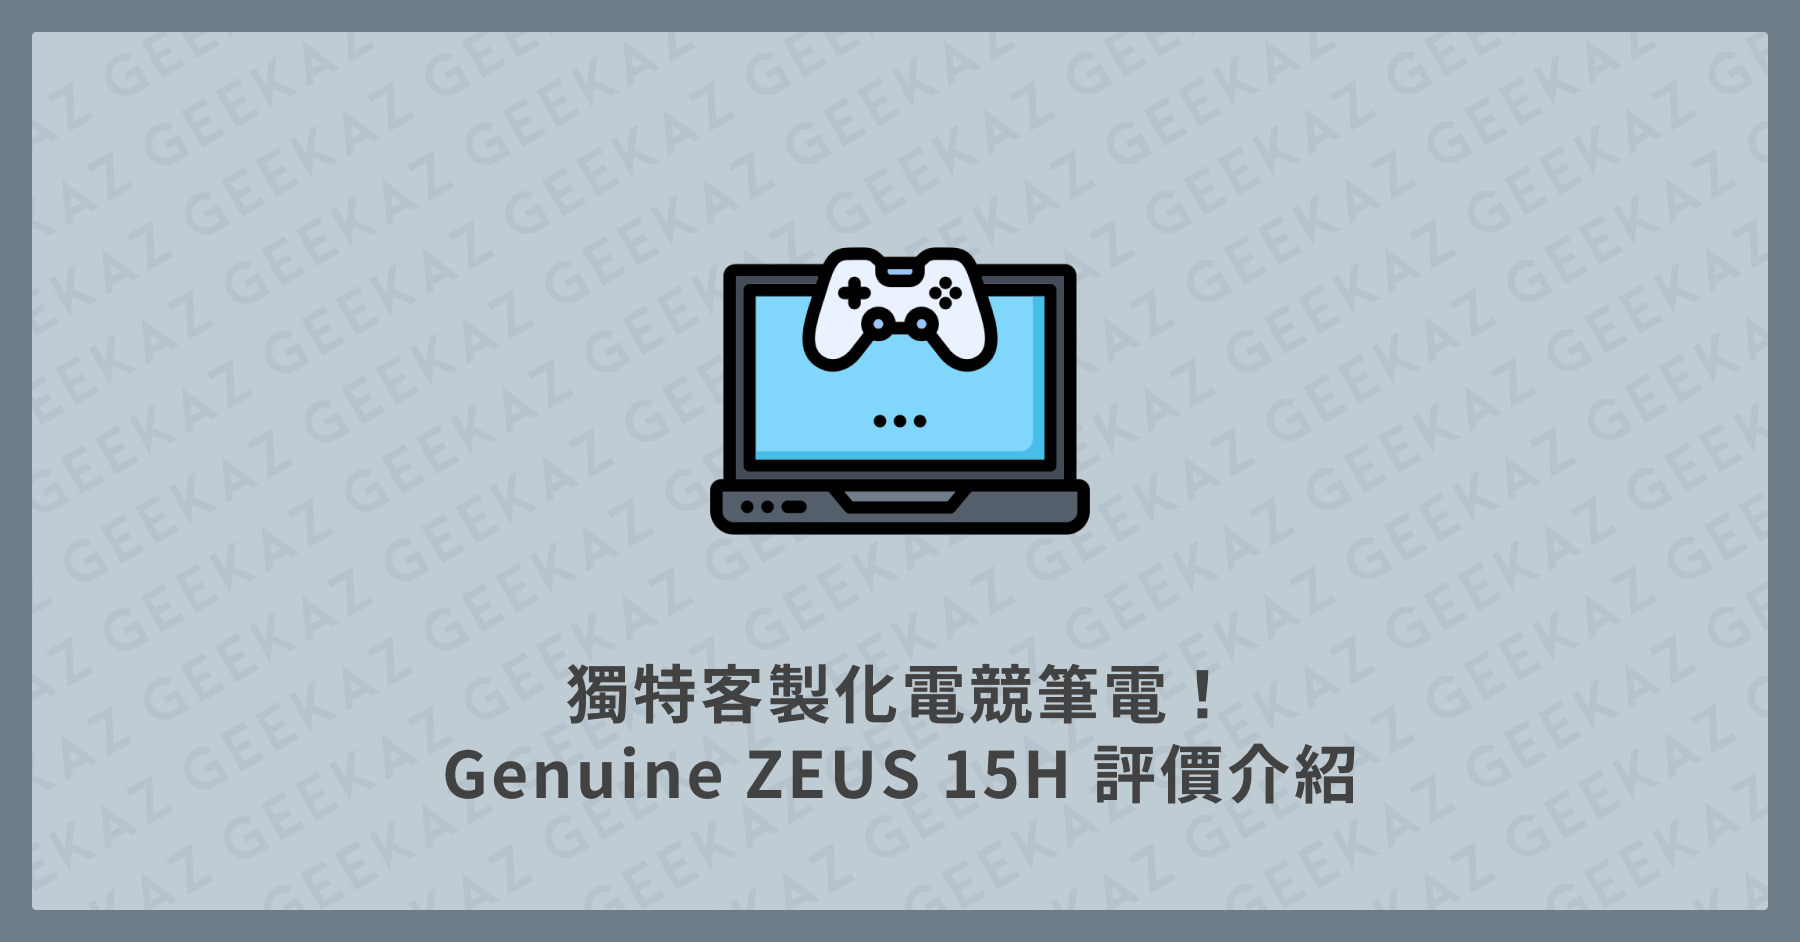 Genuine ZEUS 15H 評價